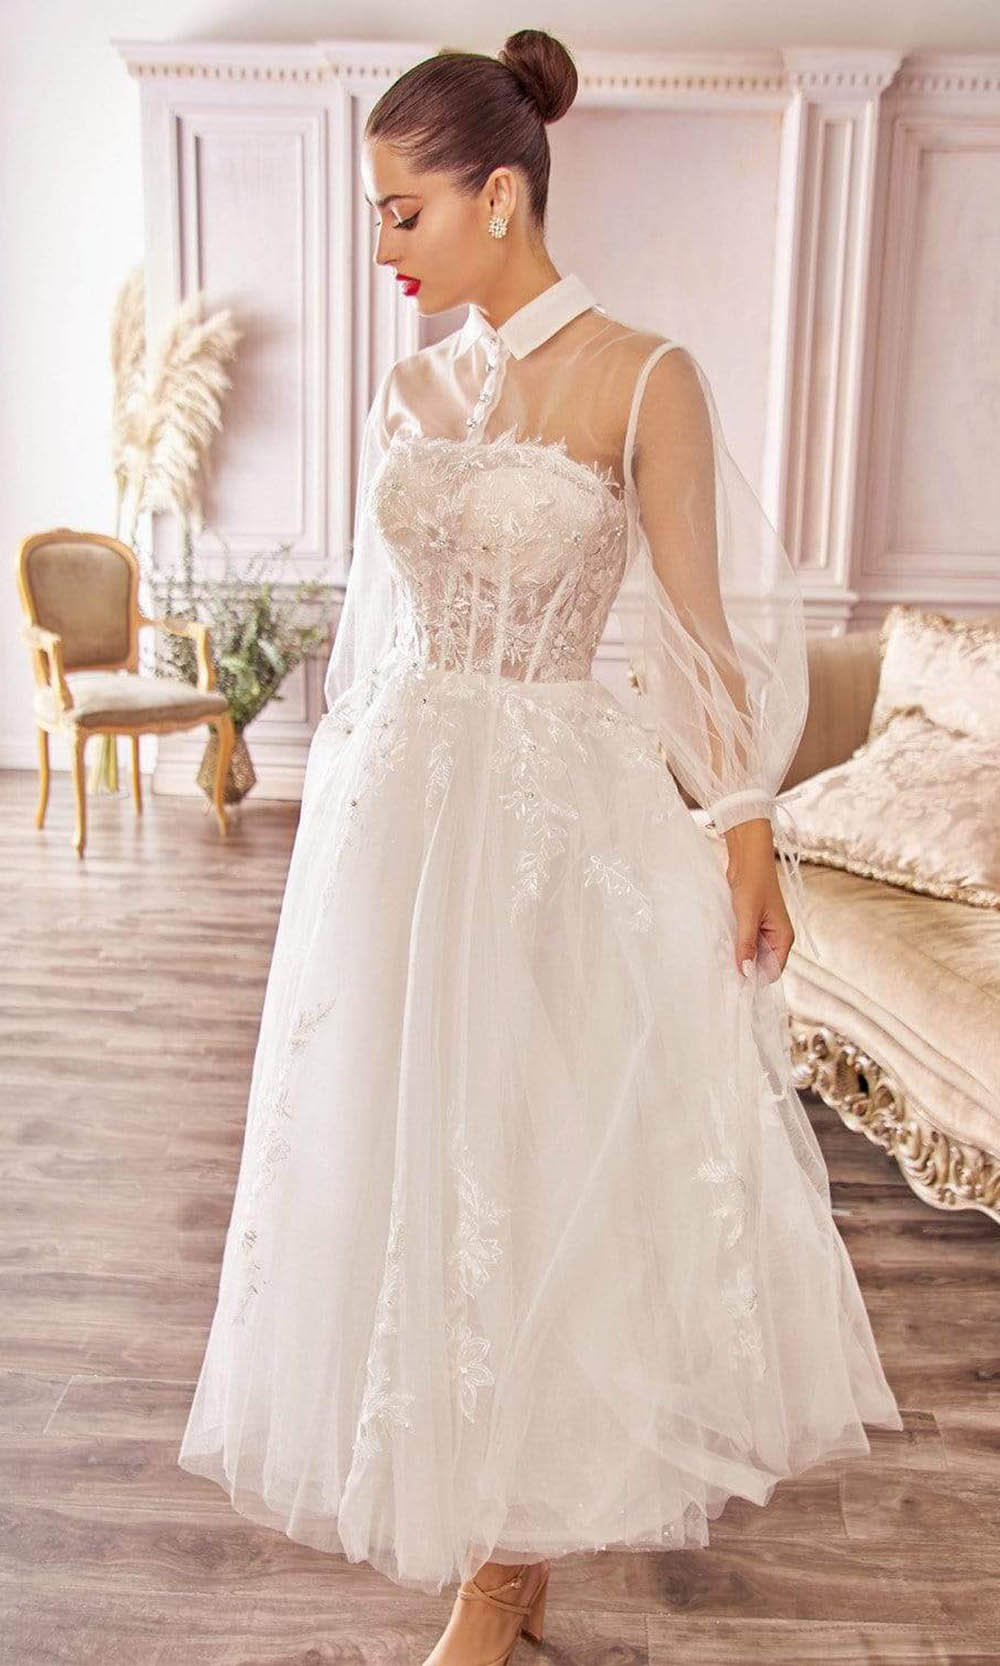 Wedding Night Outfit | Bride Evening Dress | NADINE MERABI